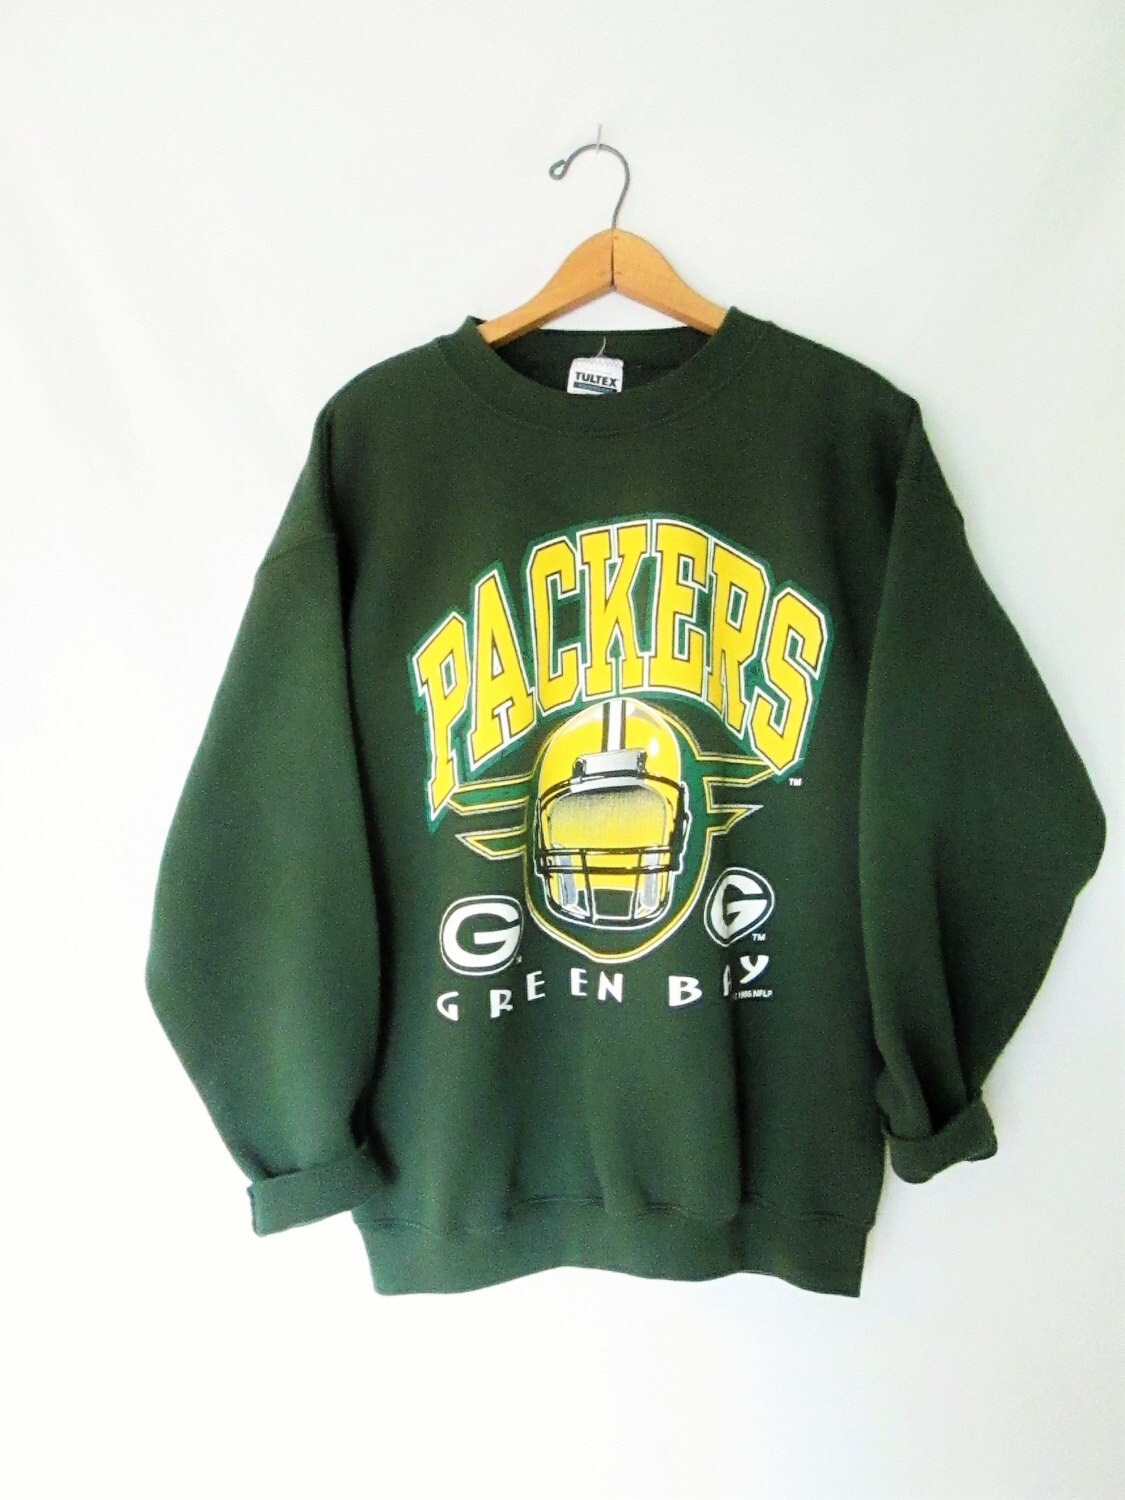 Vintage 1995 Green Bay Packers NFL Football Sweatshirt Sz L